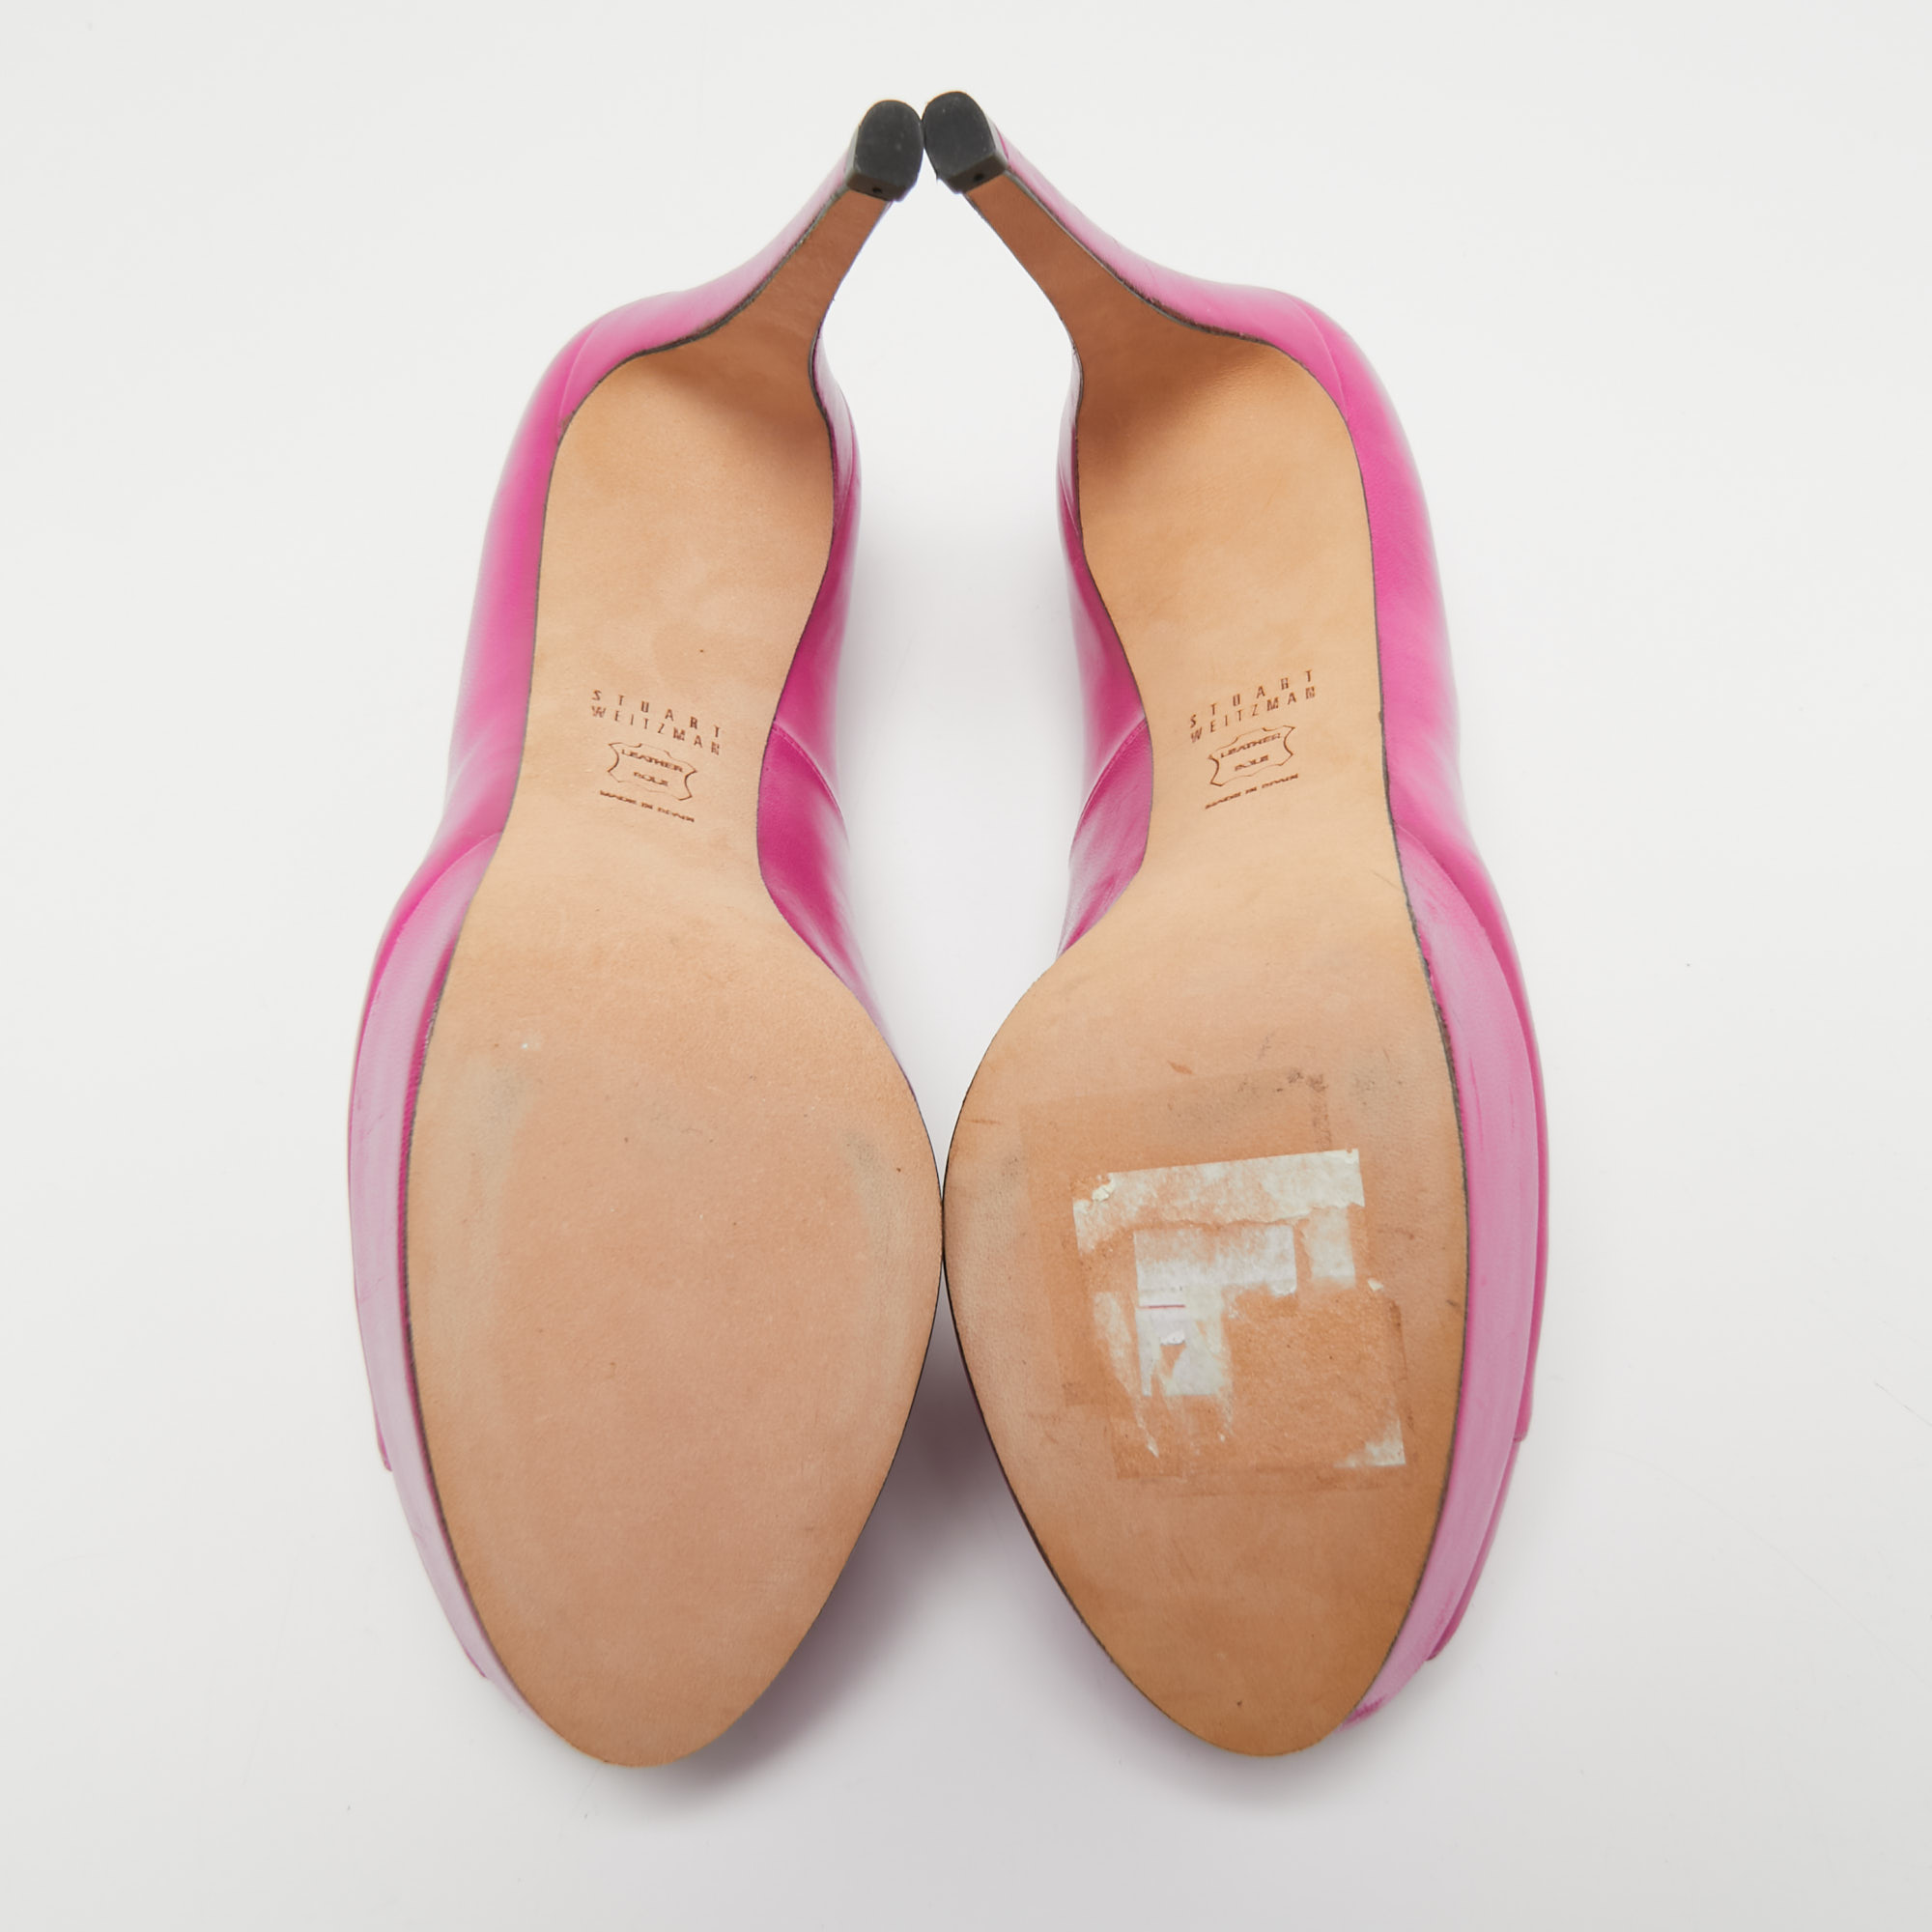 Stuart Weitzman Pink Leather Peep Toe Platform Pumps Size 41